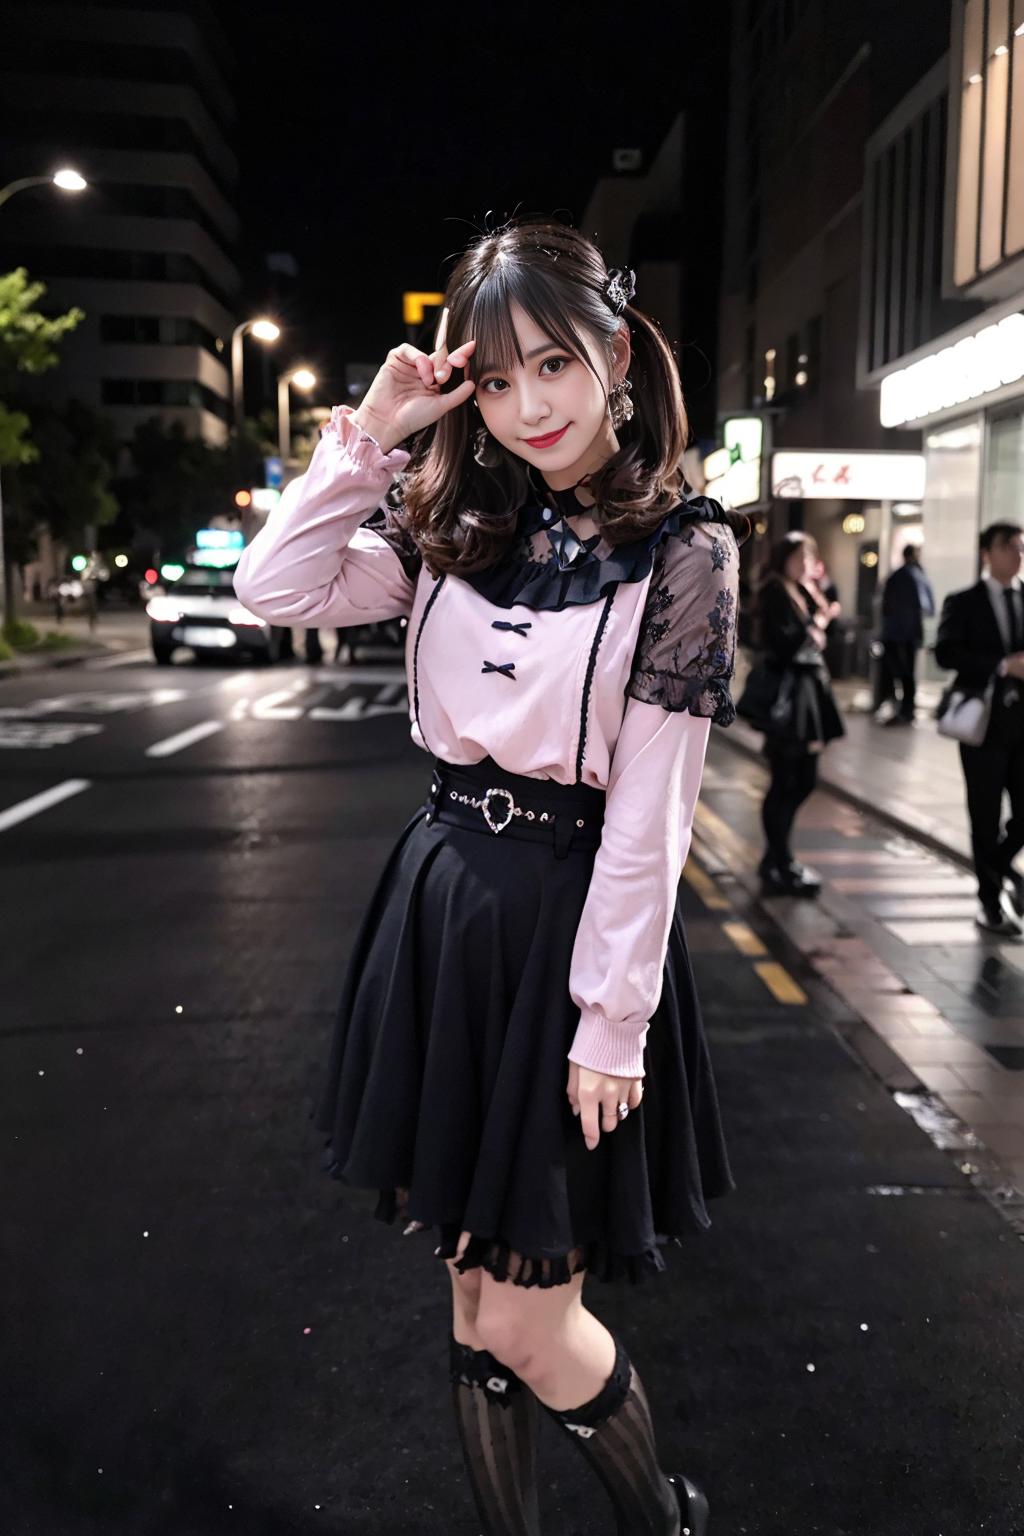 Jirai Kei fashion dress | 地雷系服装 image by cyberAngel_